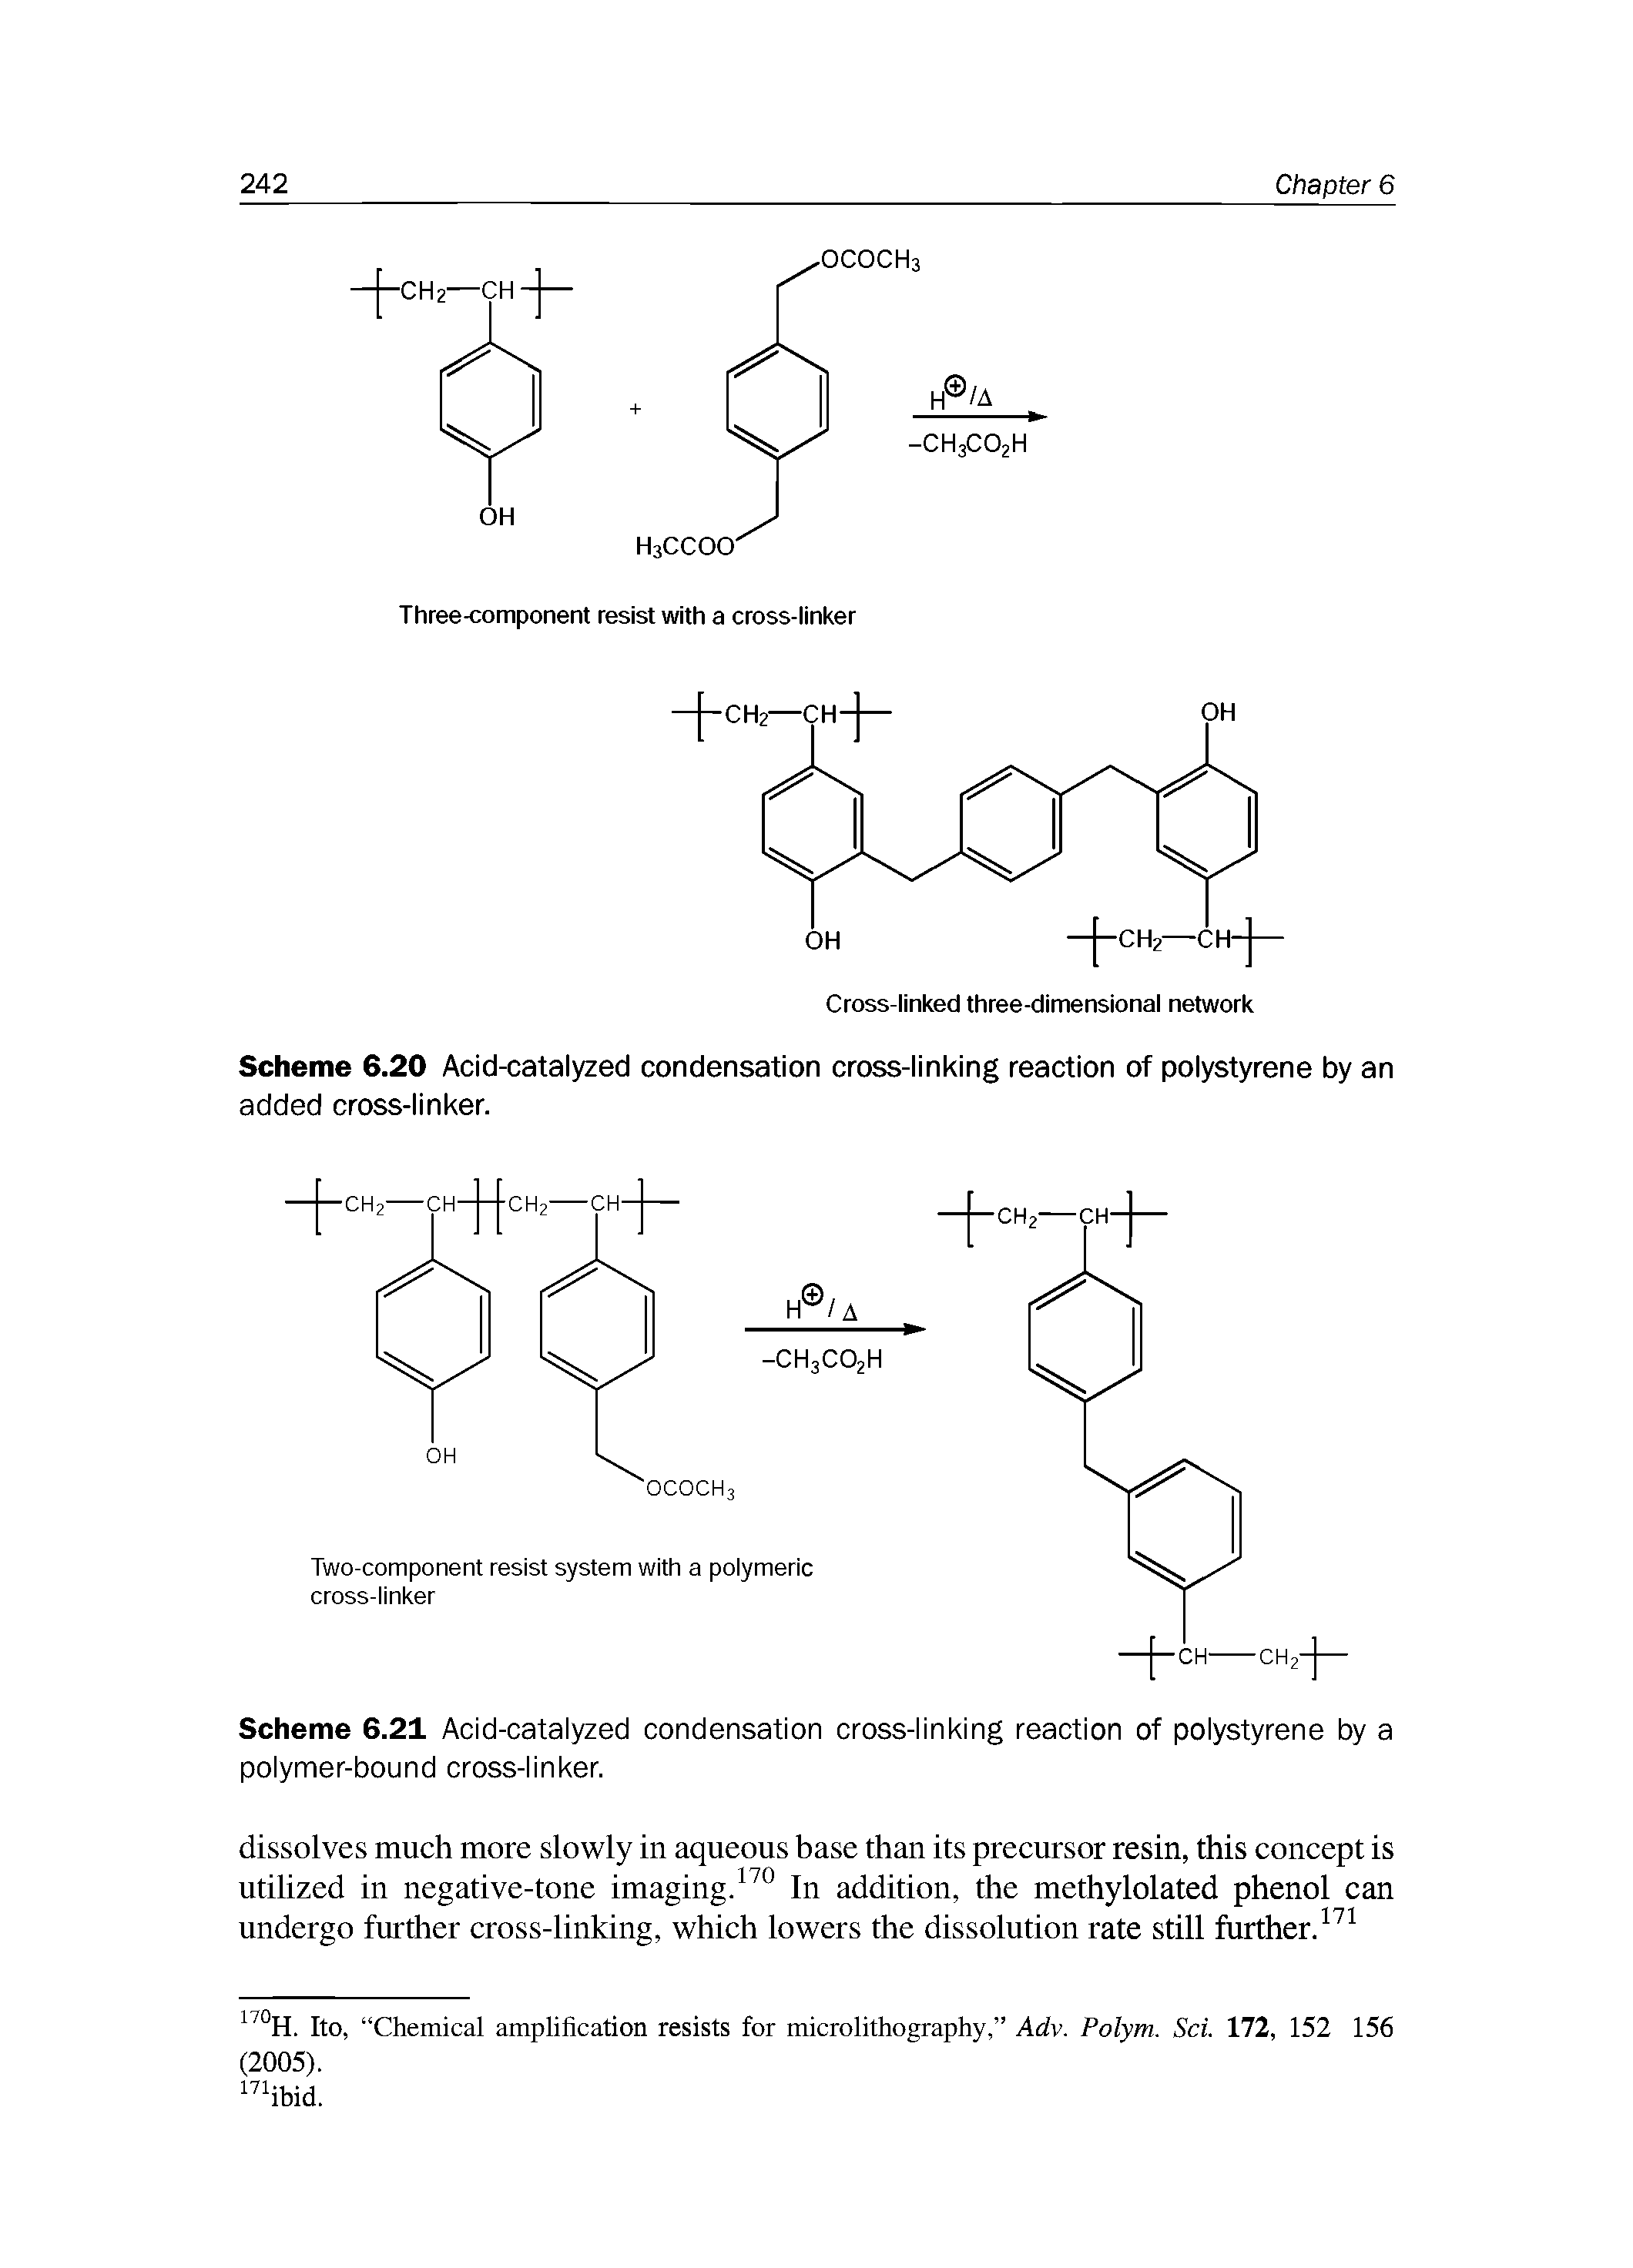 Scheme 6.20 Acid-catalyzed condensation cross-linking reaction of polystyrene by an added cross-linker.